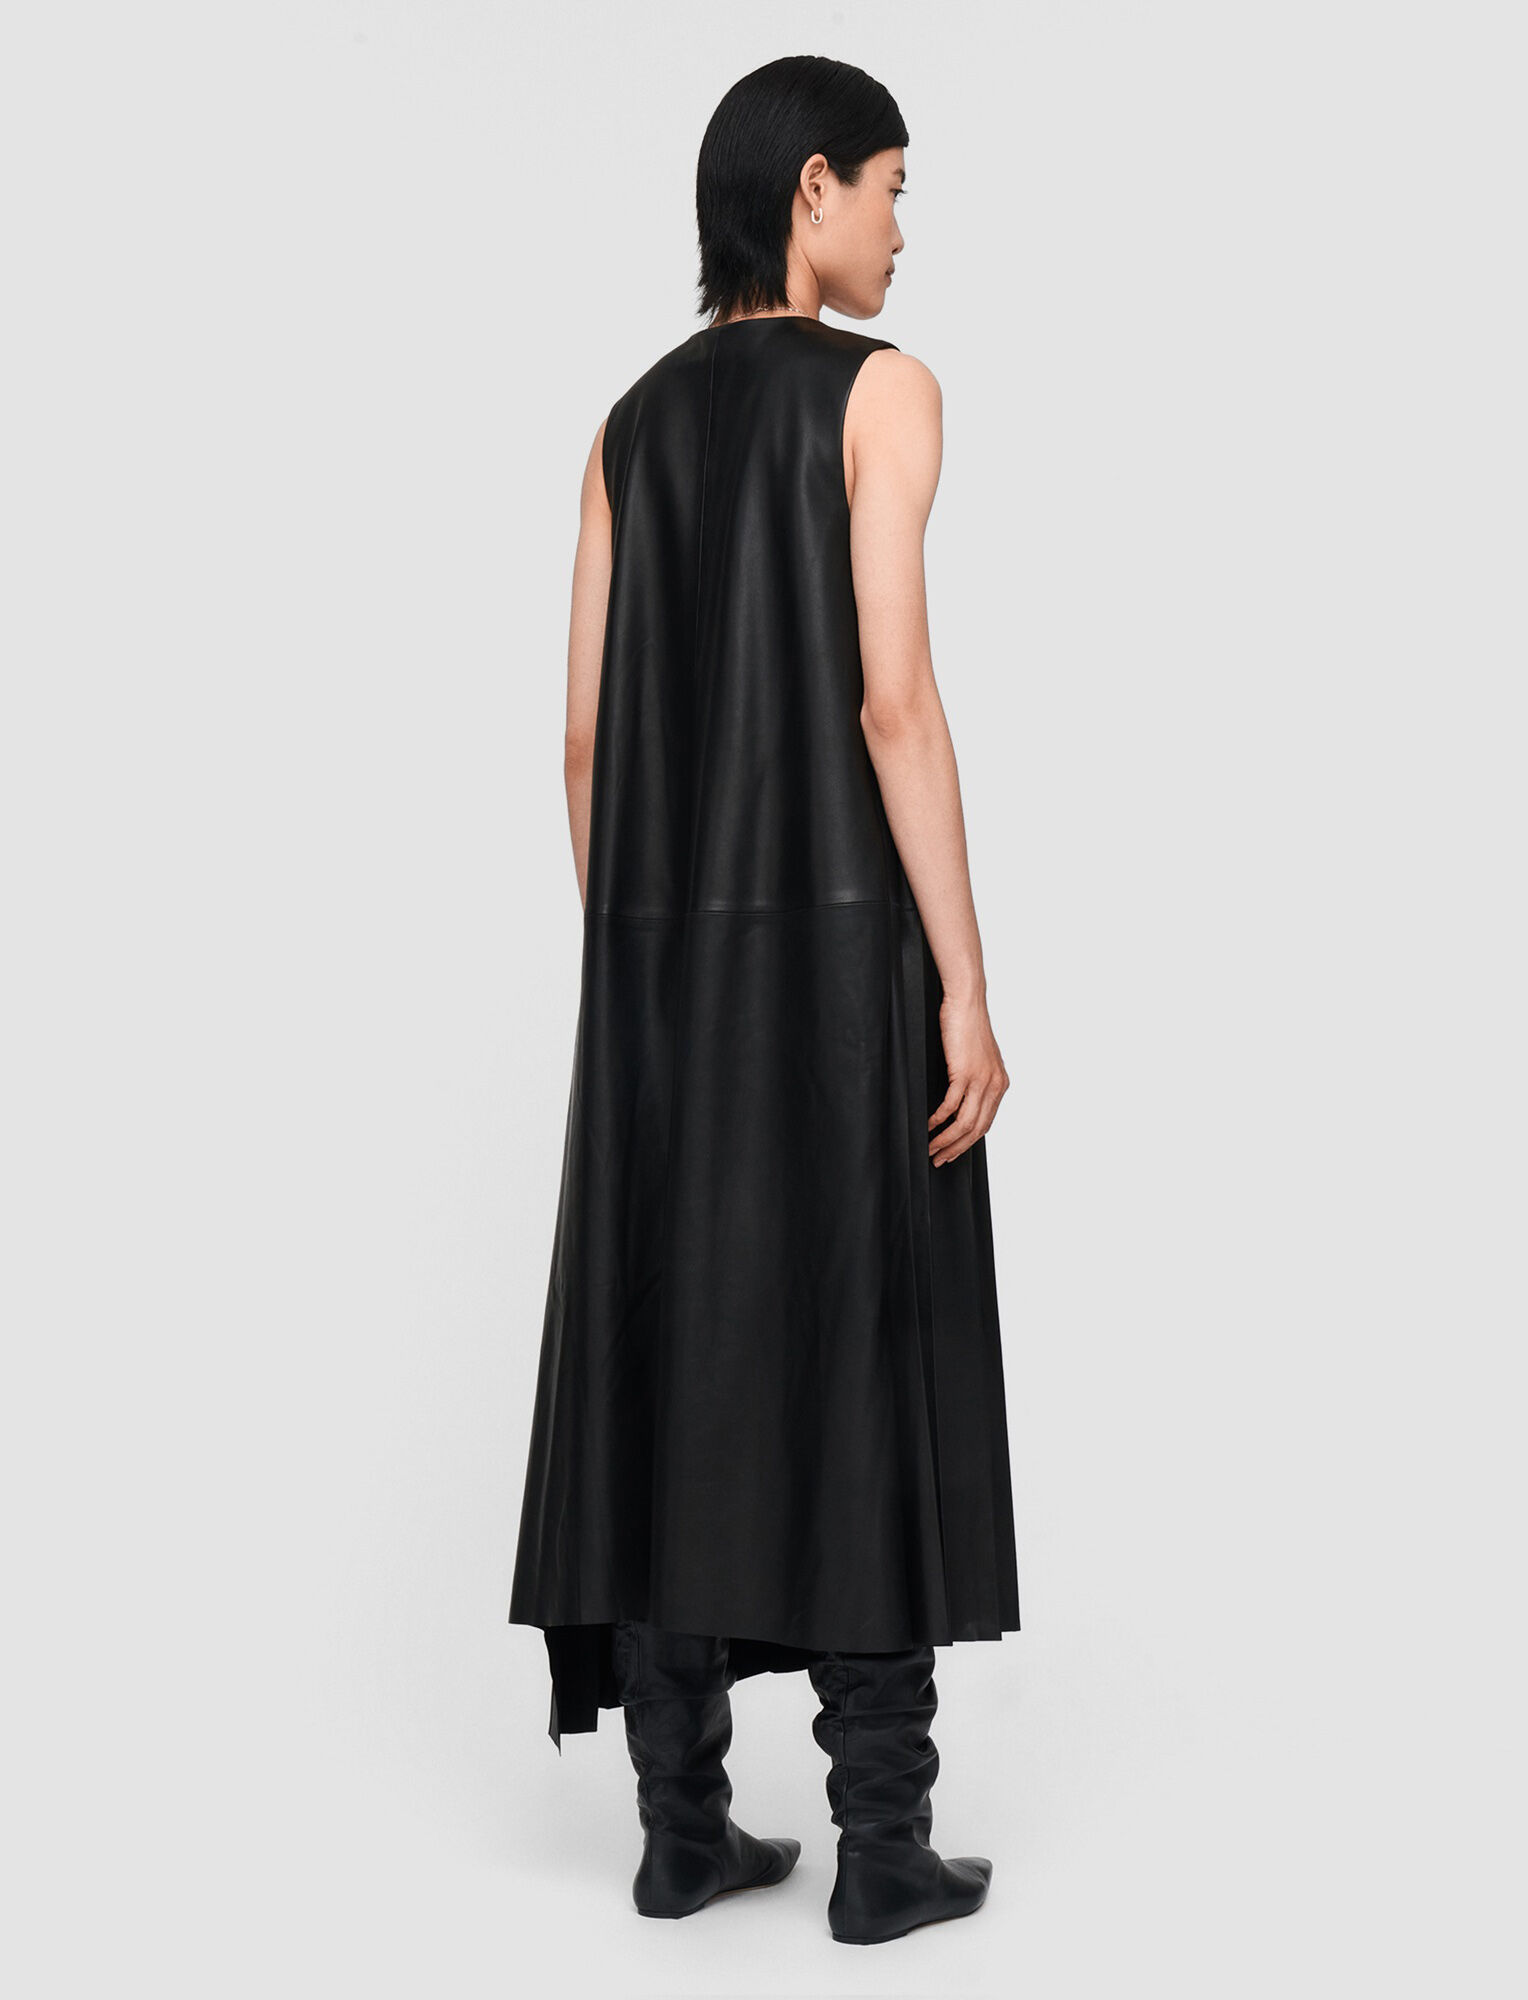 Joseph, Pleated Leather Garratt Dress, in Black